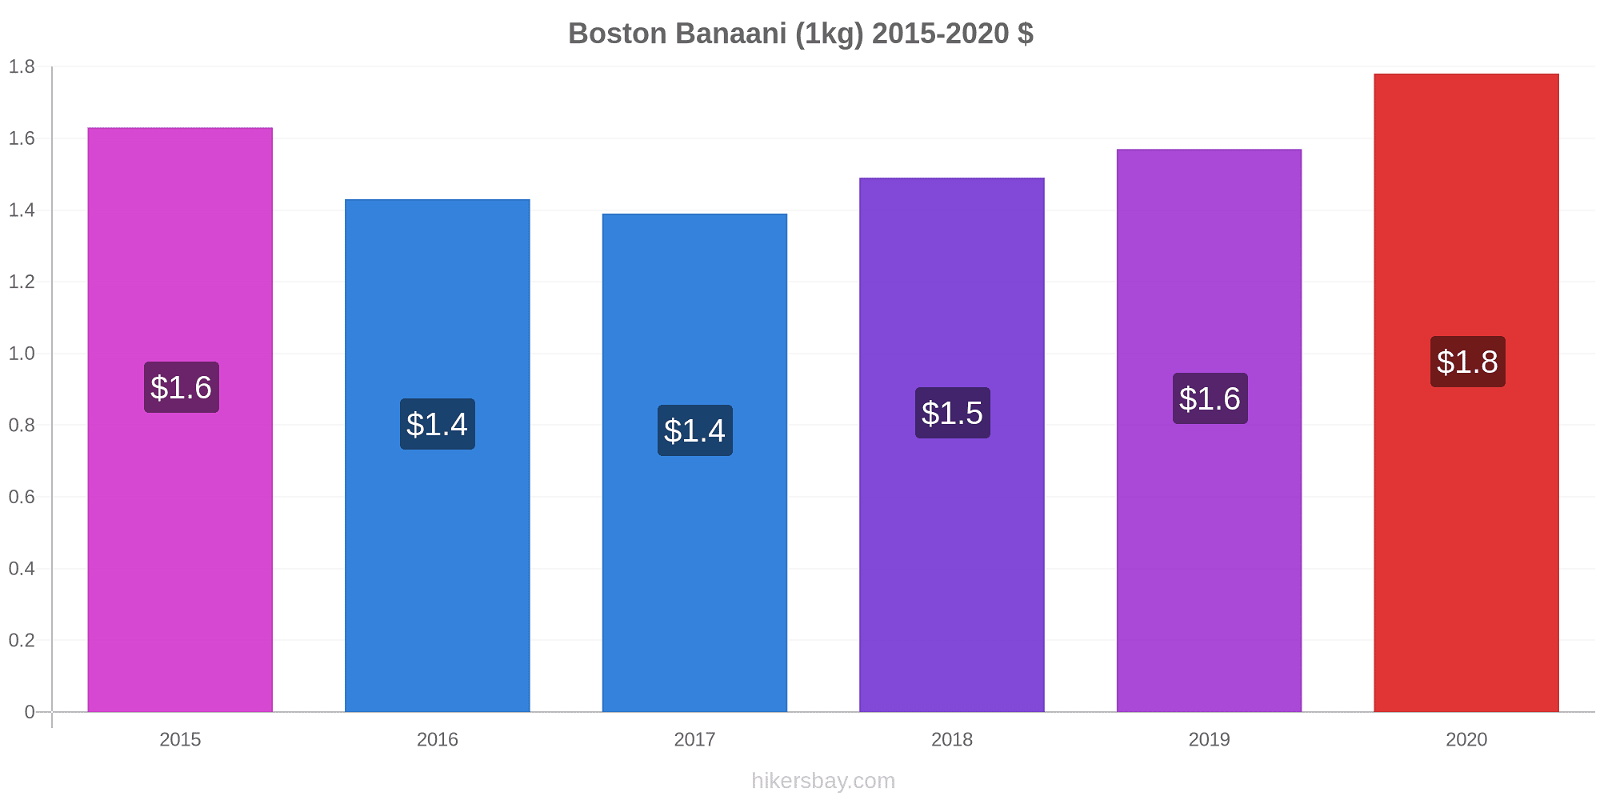 Boston hintojen muutokset Banaani (1kg) hikersbay.com